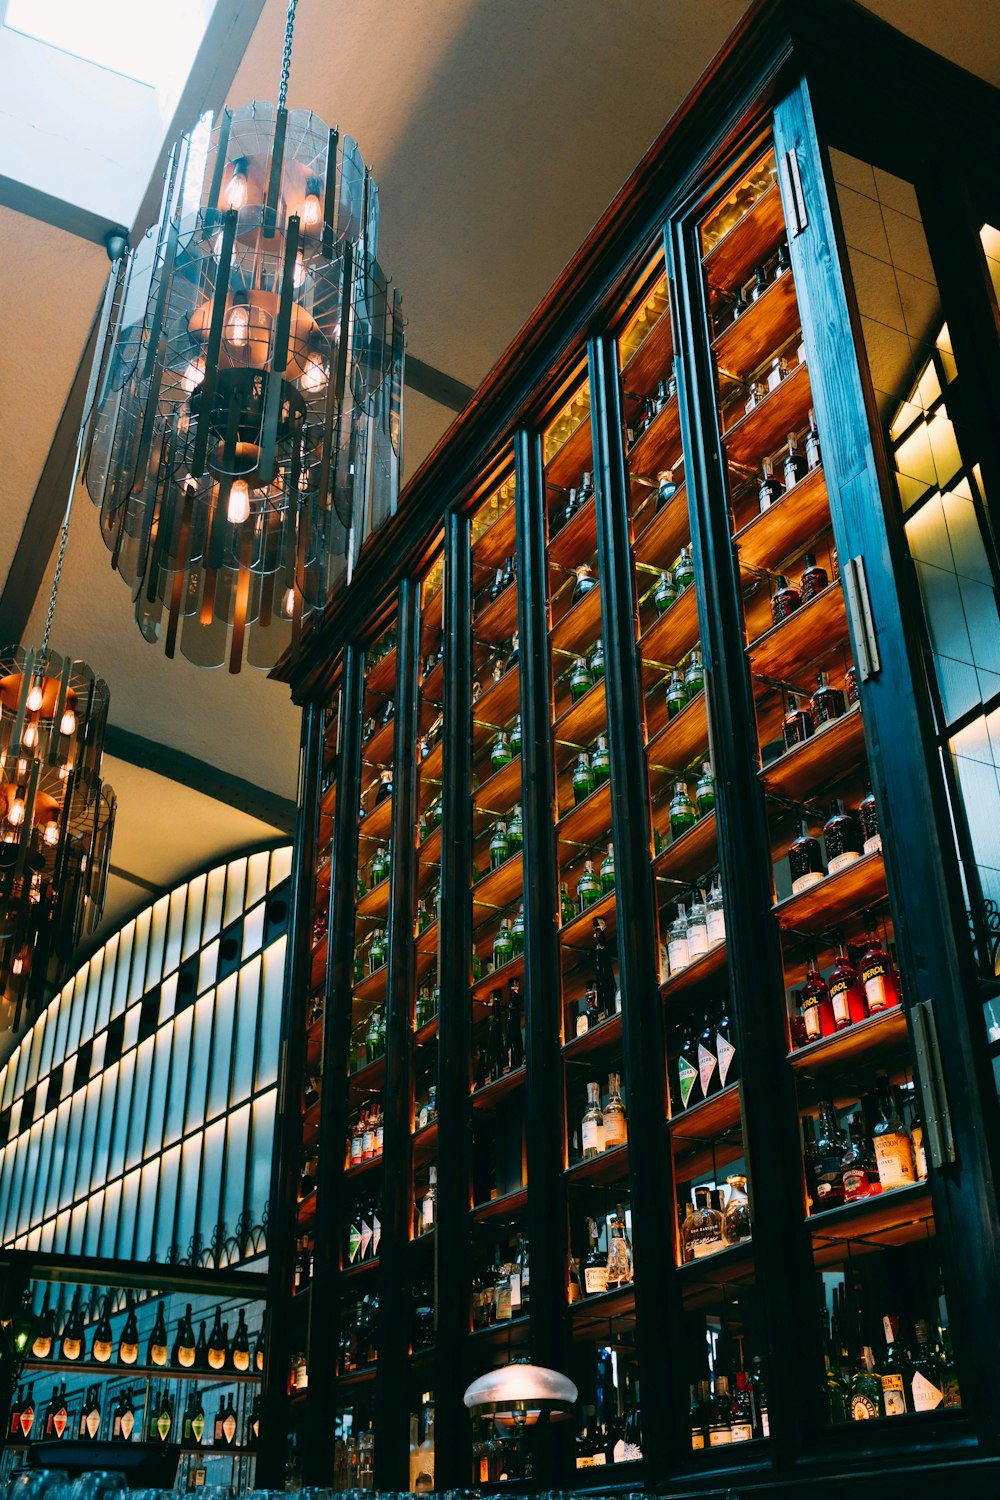 close photo of bottle cabinet